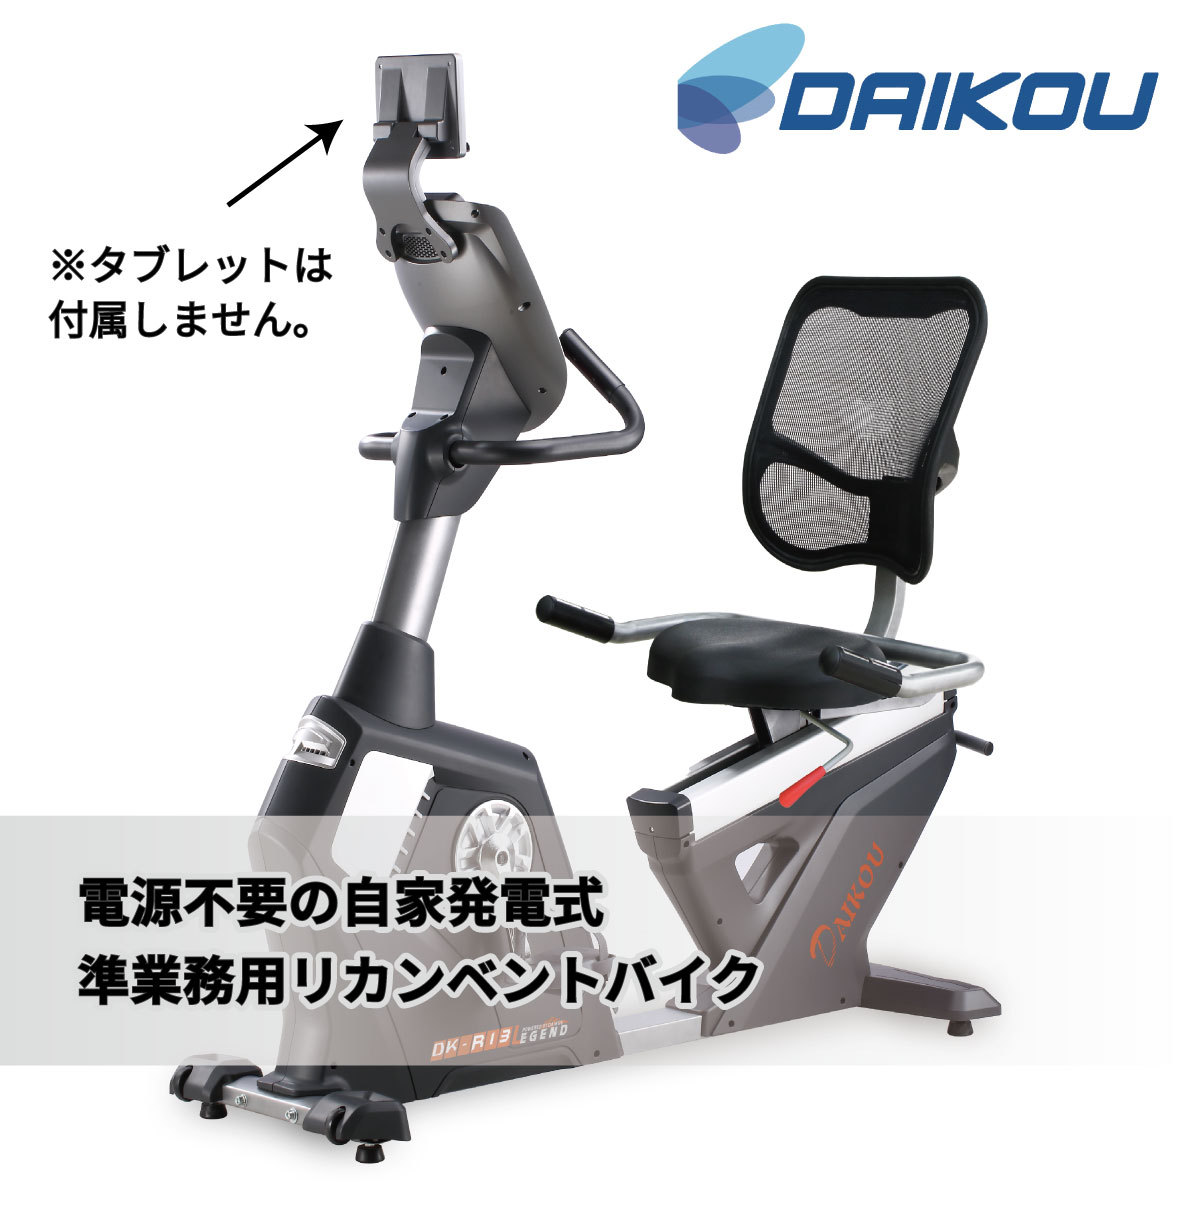 63%OFF!】 大広 DAIKOU DK-8604R リカンベントバイク フィットネスバイク 家庭用